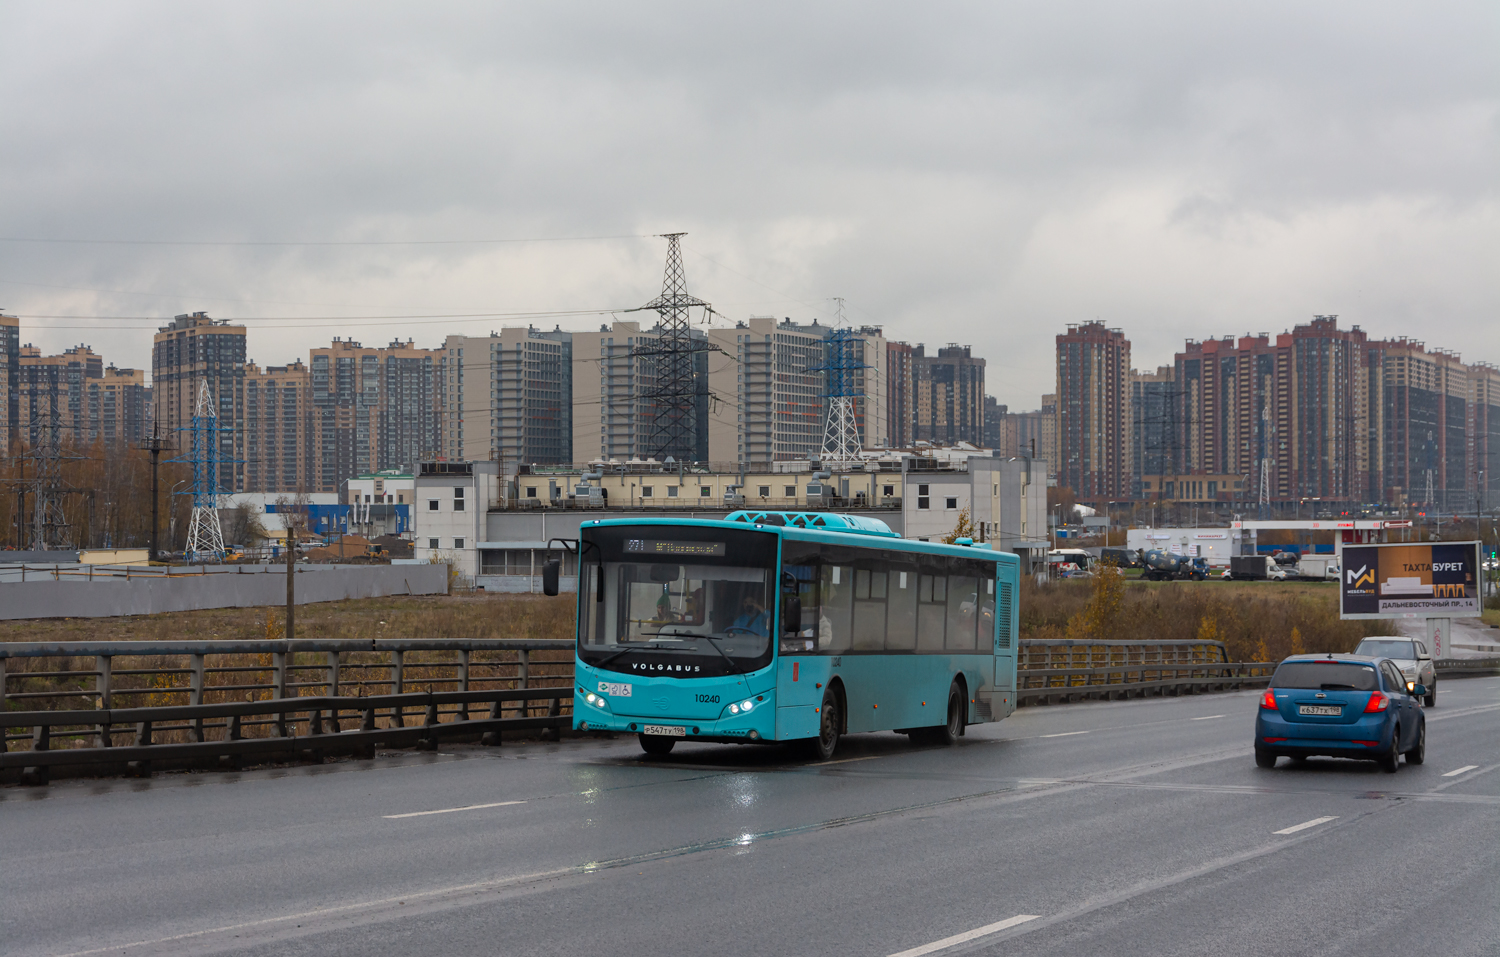 San Pietroburgo, Volgabus-5270.G4 (LNG) # 10240